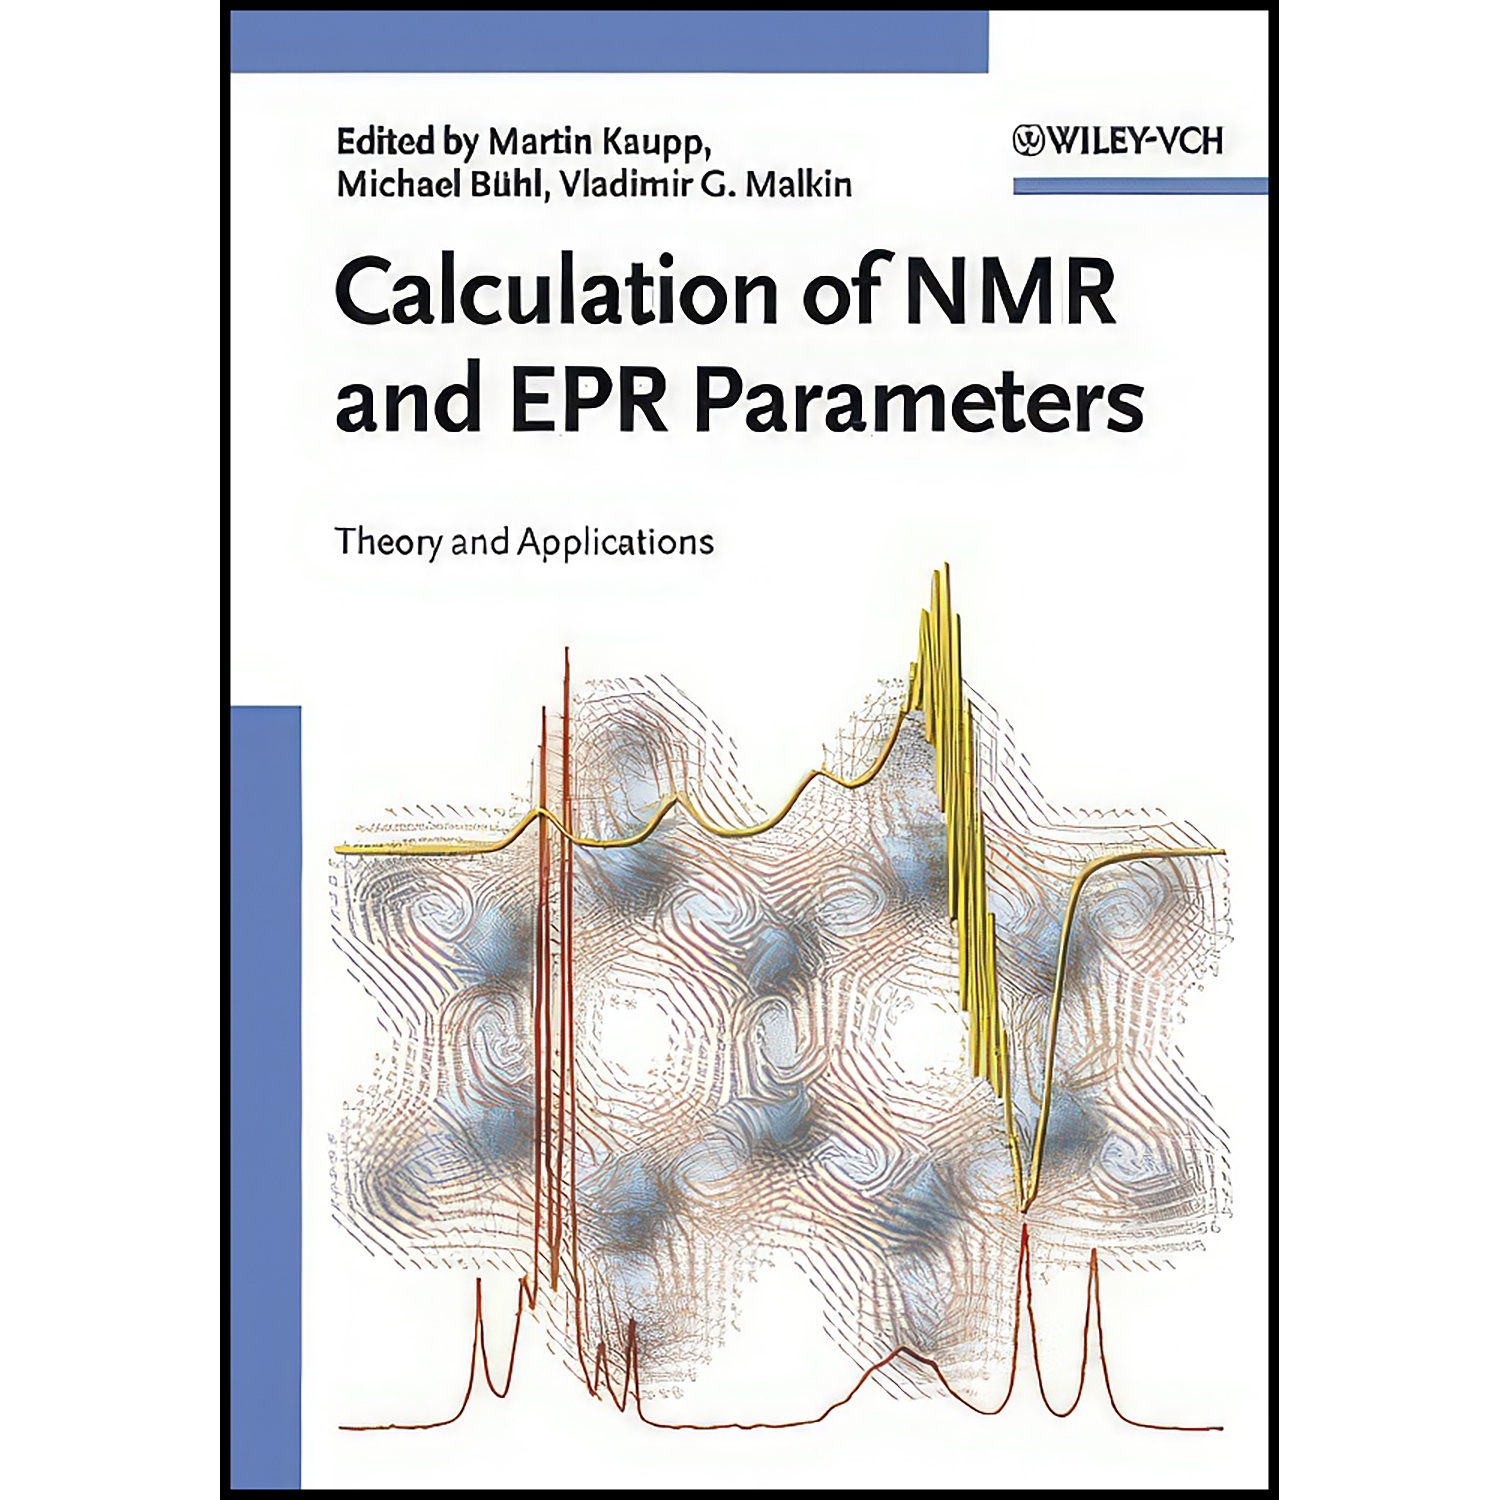 کتاب Calculation of NMR and EPR Parameters اثر جمعي از نويسندگان انتشارات Wiley-VCH